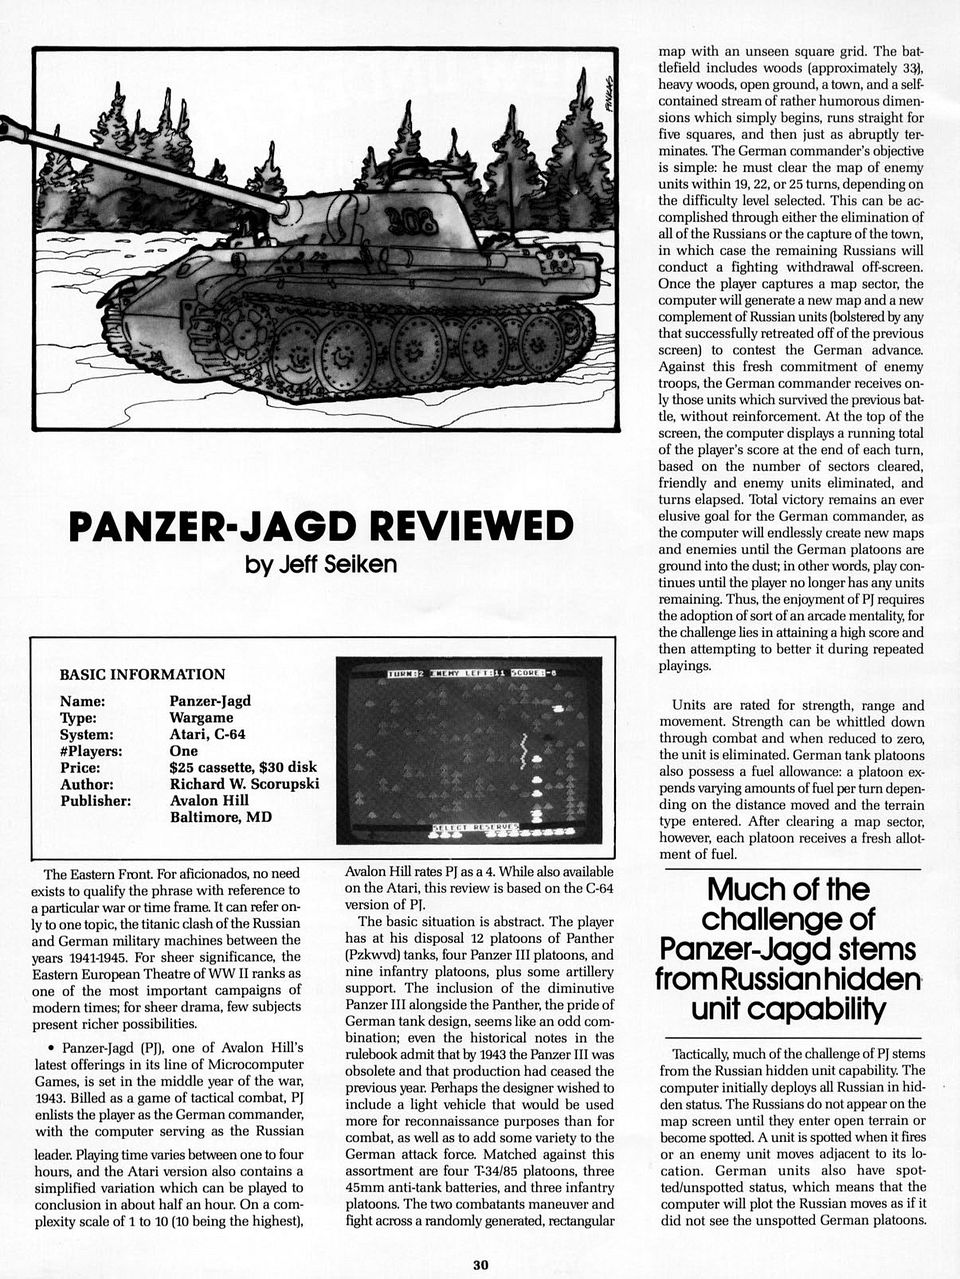 Panzer-Jagd Reviewed